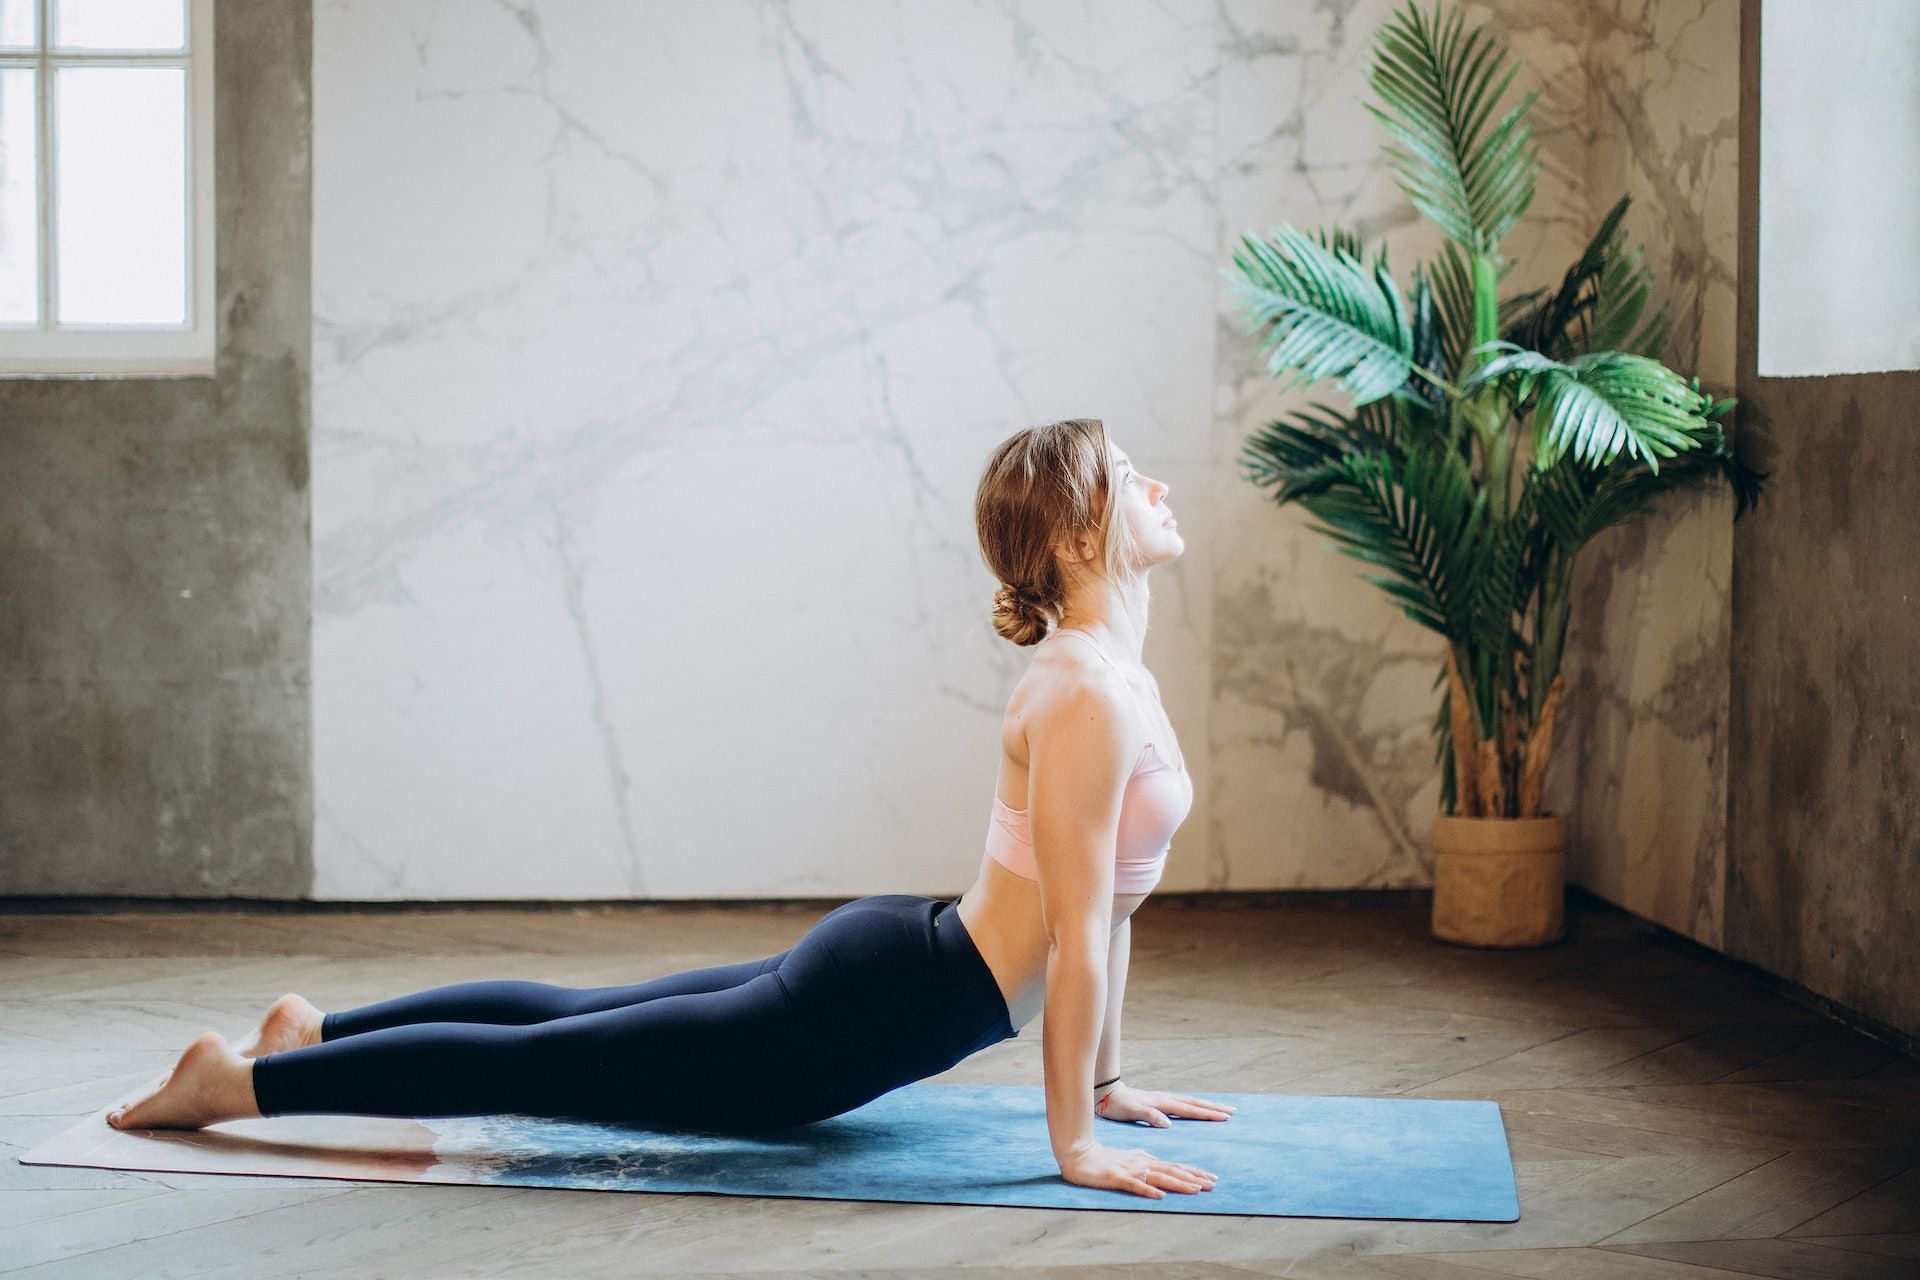 8 Yoga Poses To Develop Strong Chaturanga Arms | mindbodygreen